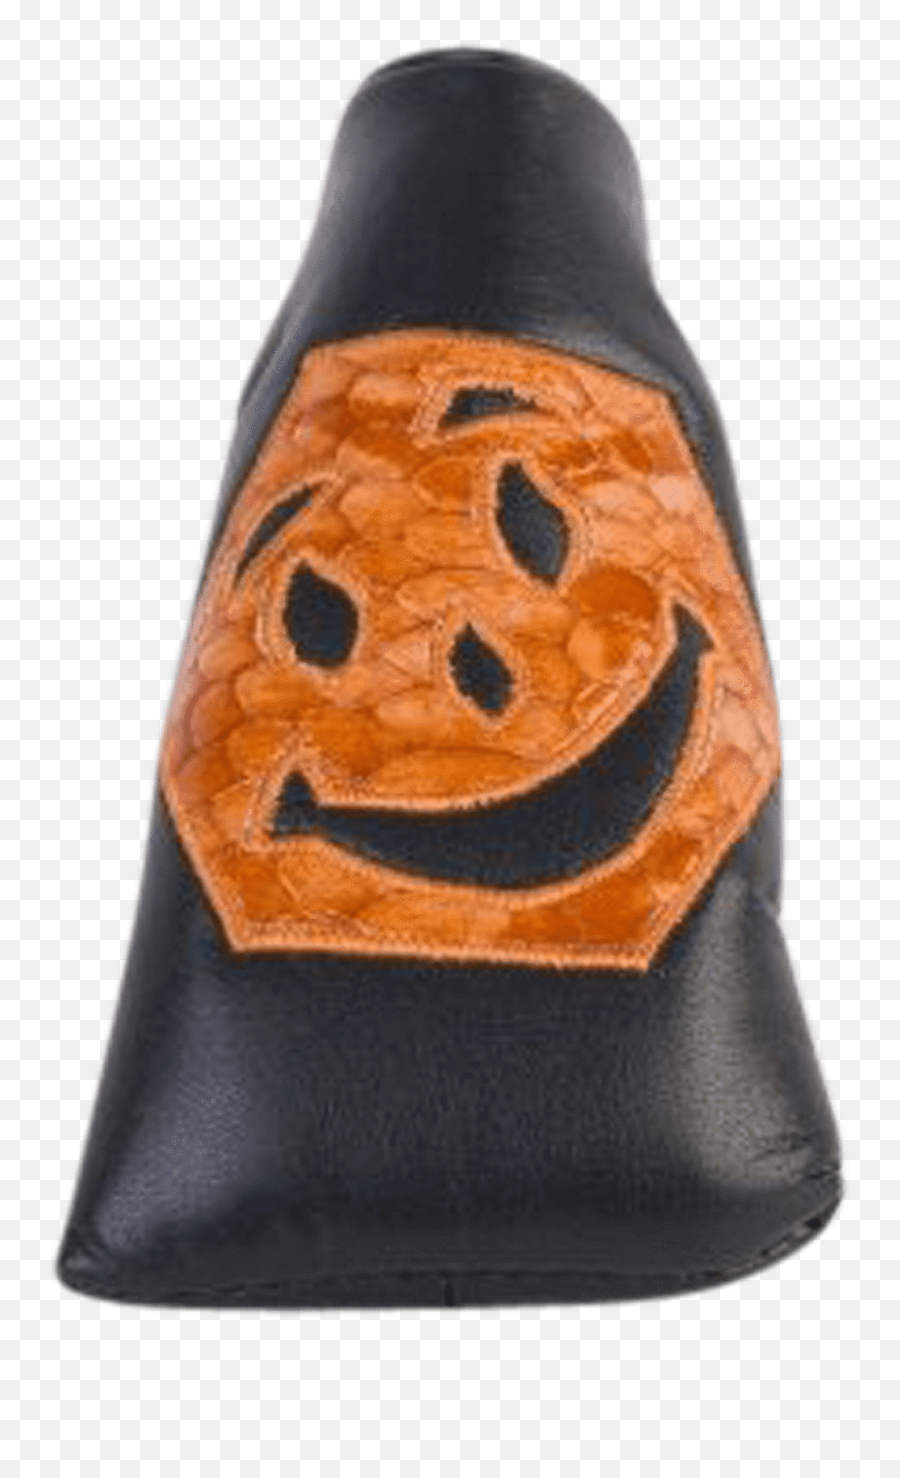 Snakeskin Ka Headcover - Happy Emoji,Candy Corn Emoticon